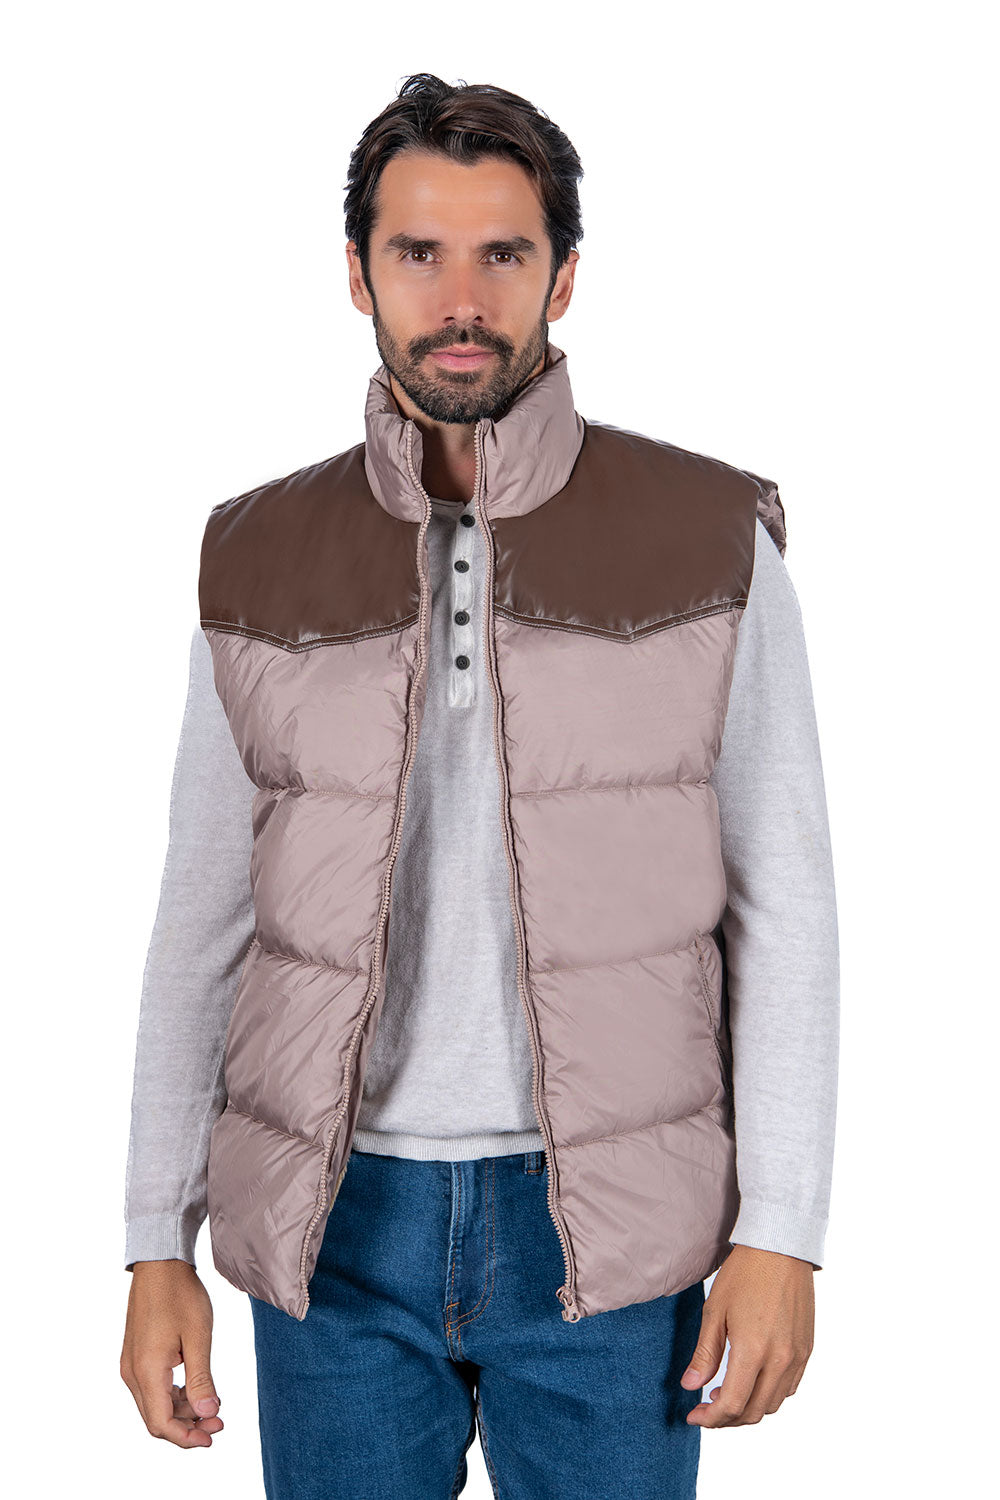 Men's Outdoor Padded Vests (S-M-L-XL-XXL / 3-7-7-4-3) 24 pcs